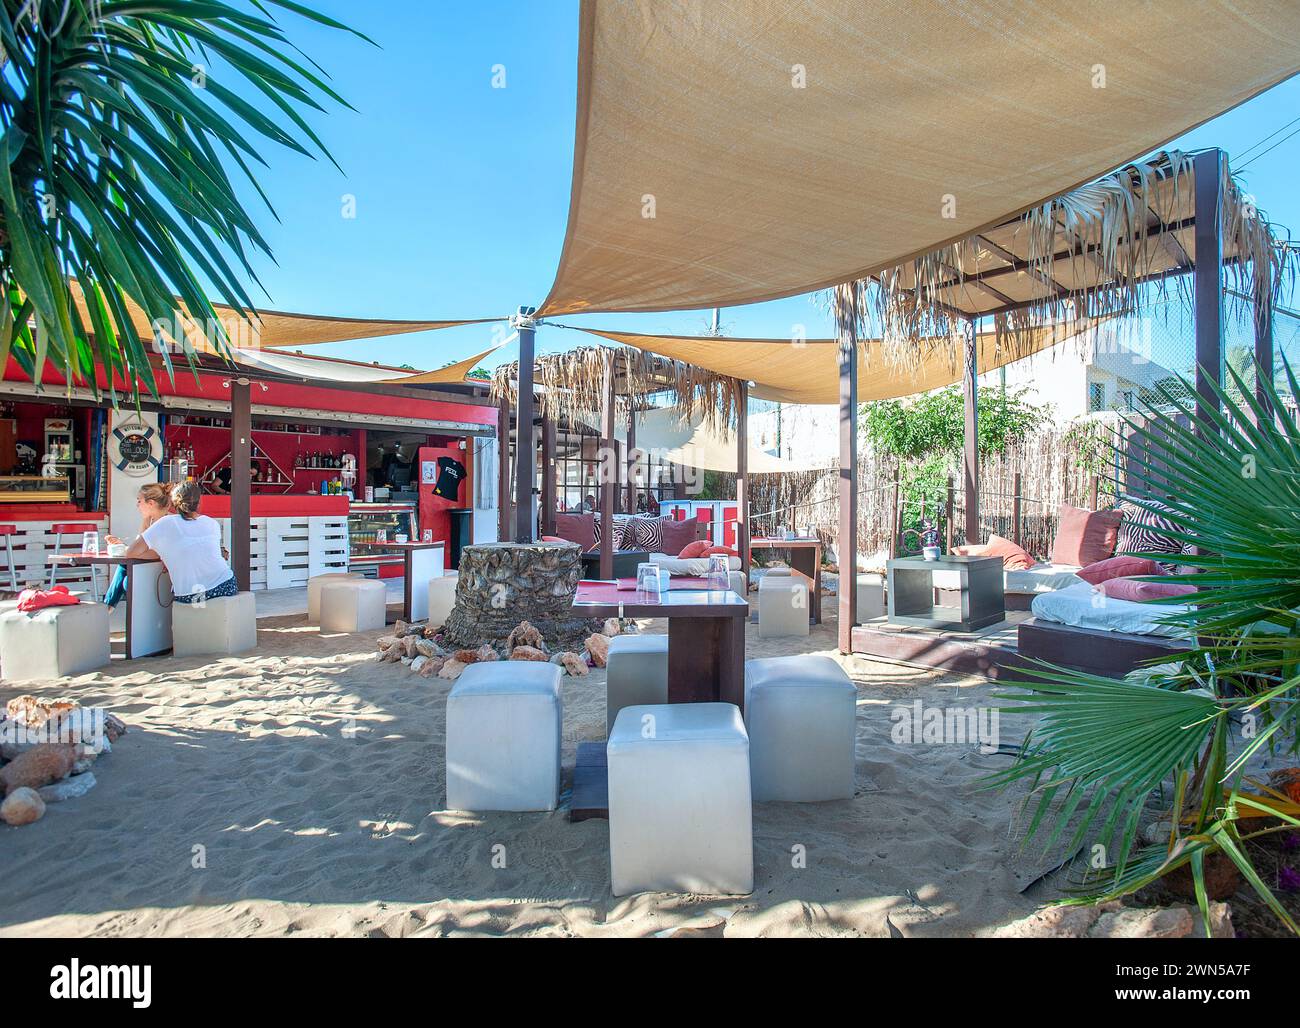 Cafe bar presso es Figueral, Ibiza, Baleari, Spagna Foto Stock